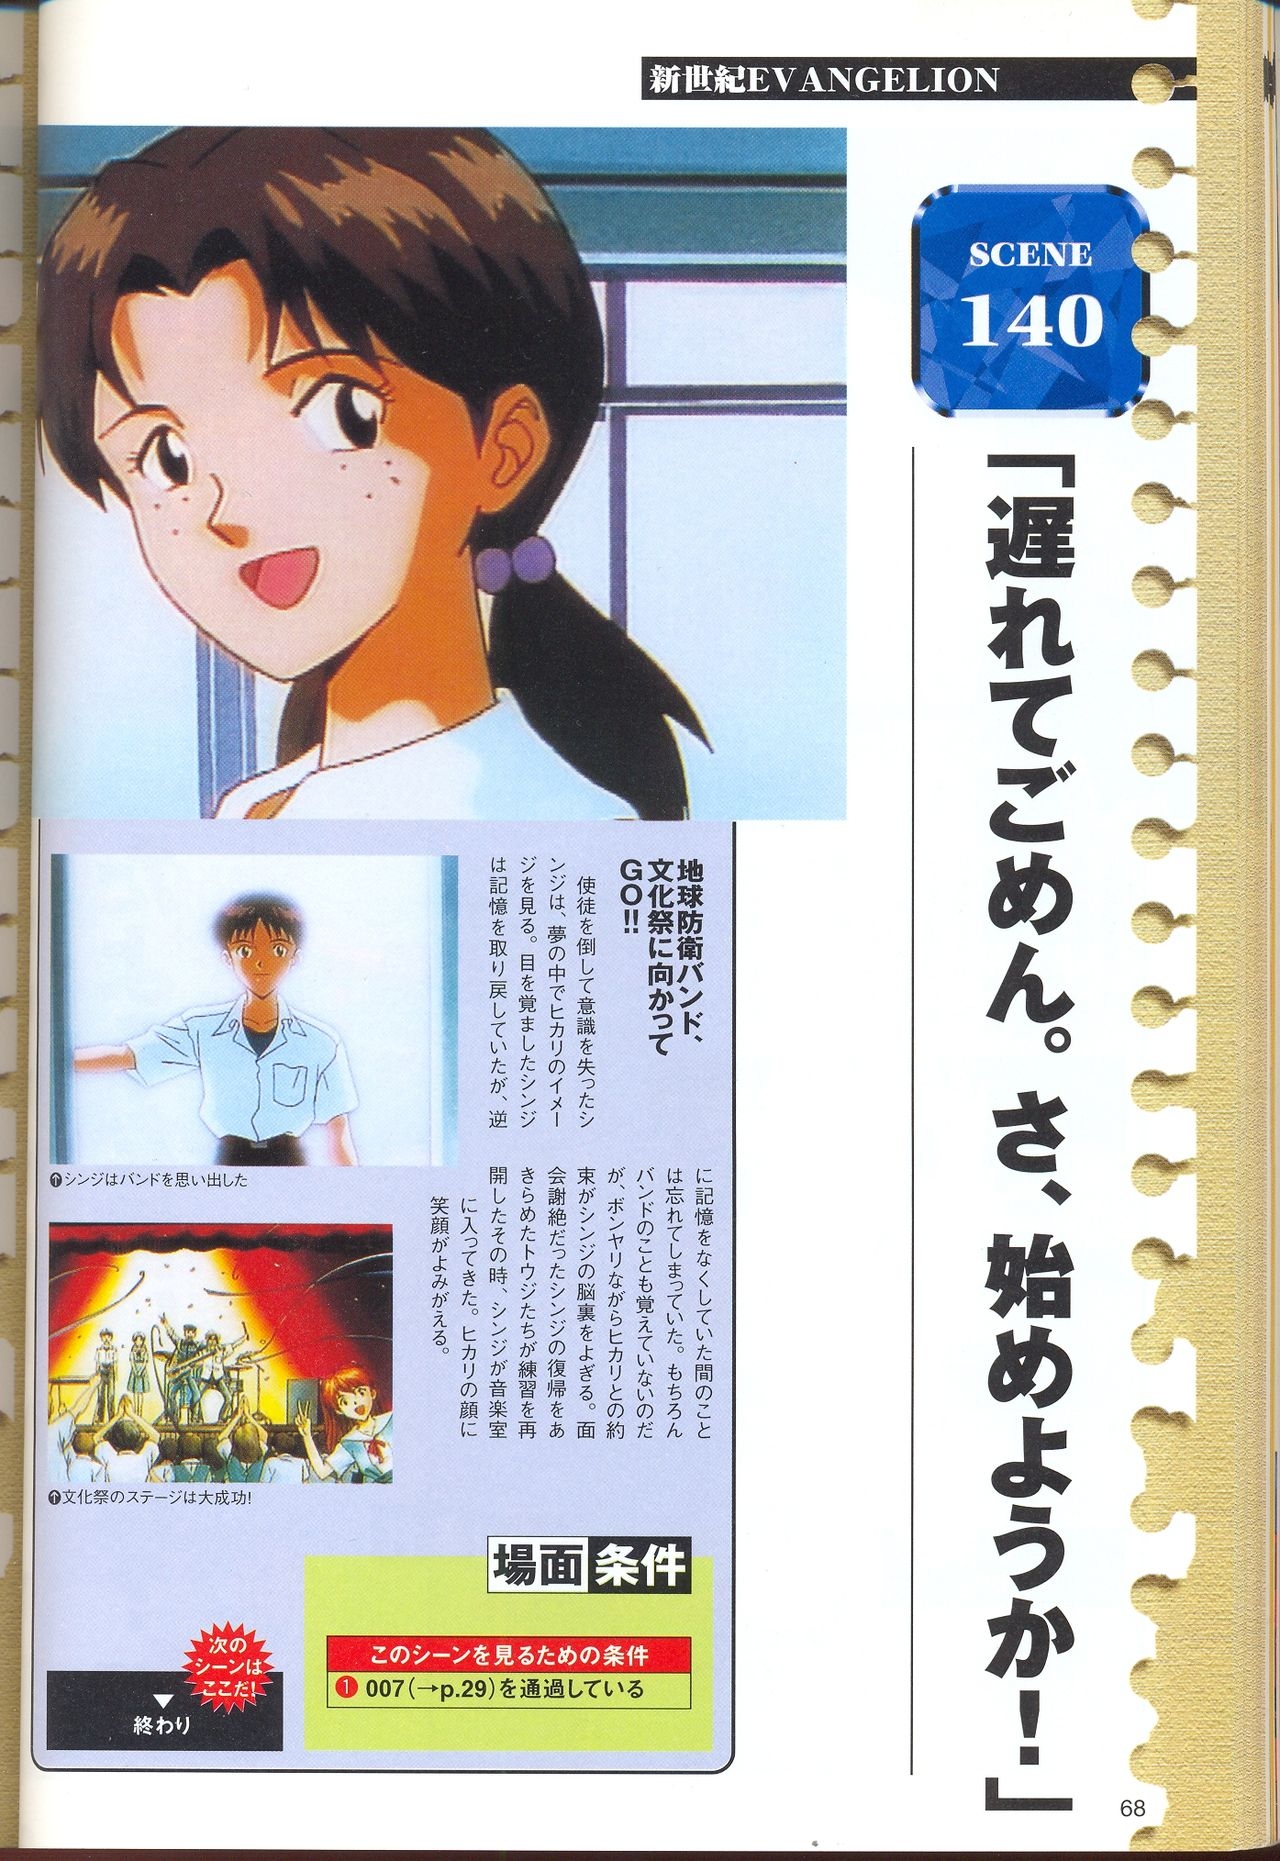 Neon Genesis Evangelion - 2nd Impression Sega Saturn Perfect Guide 67